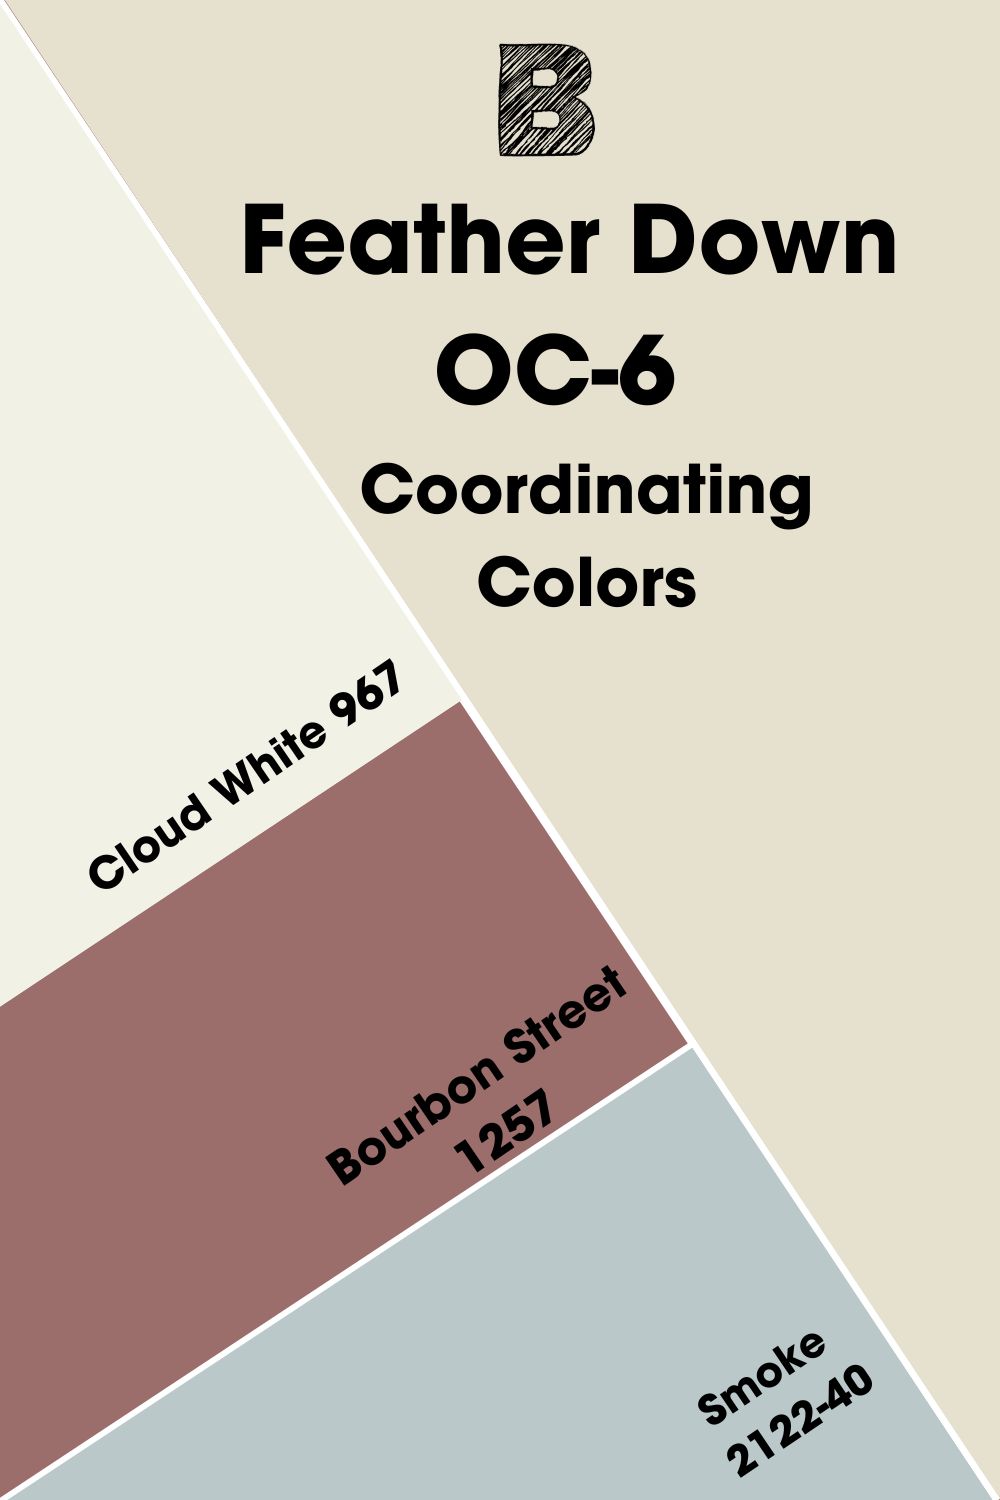  Coordinating Colors